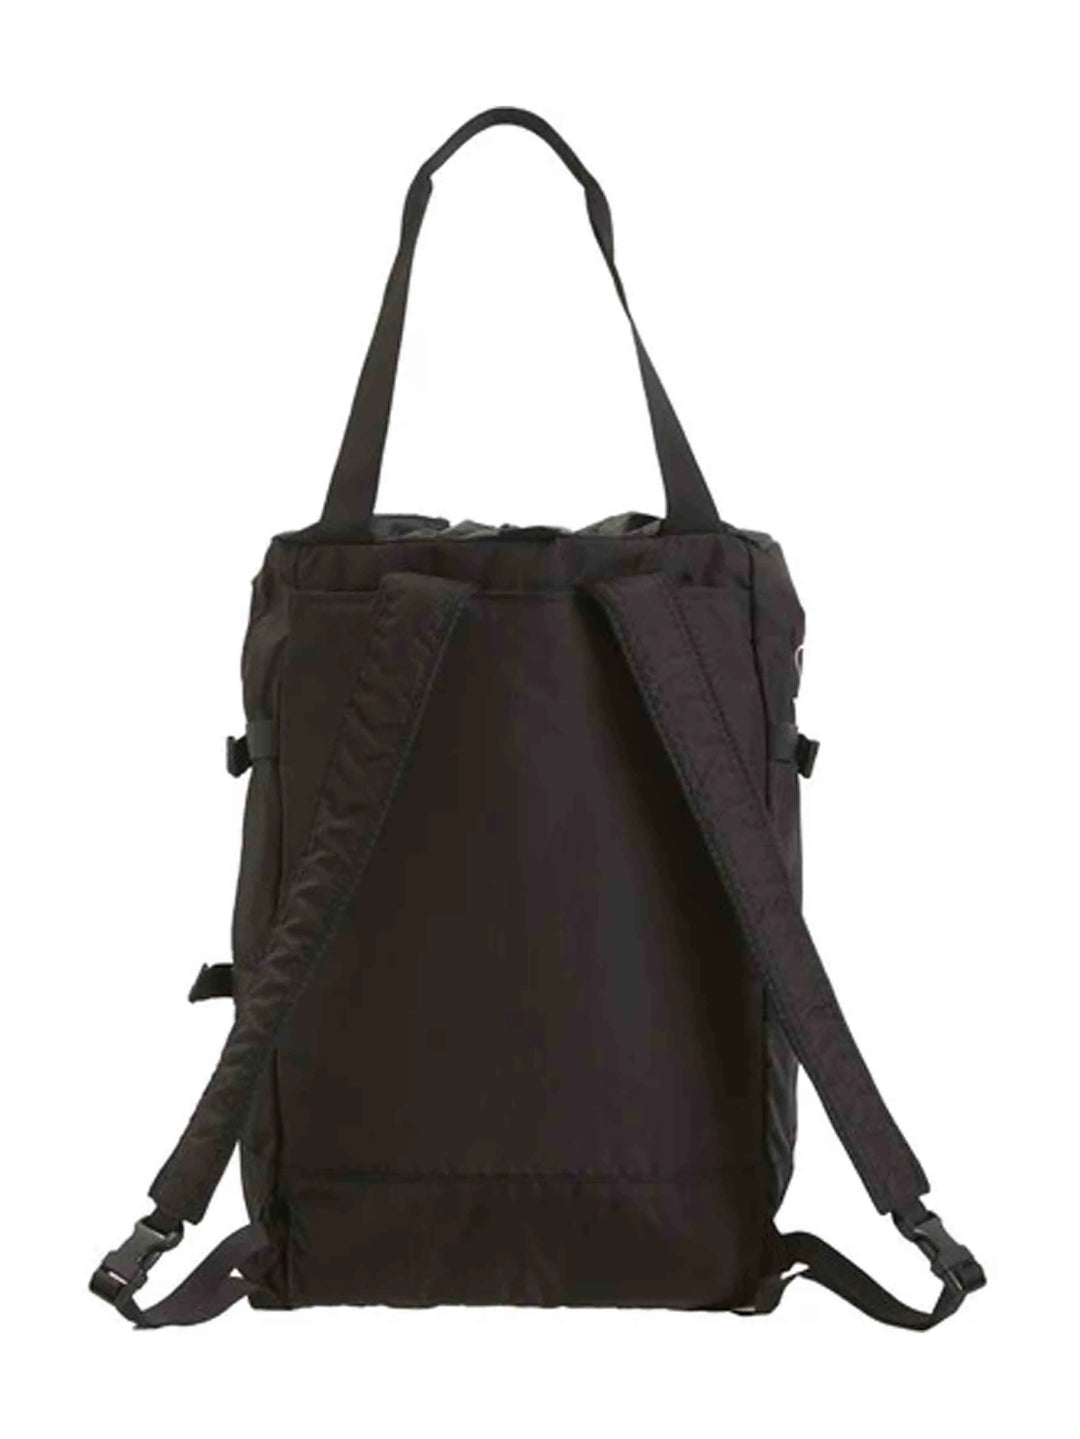 Supreme Tote Backpack Black Prior